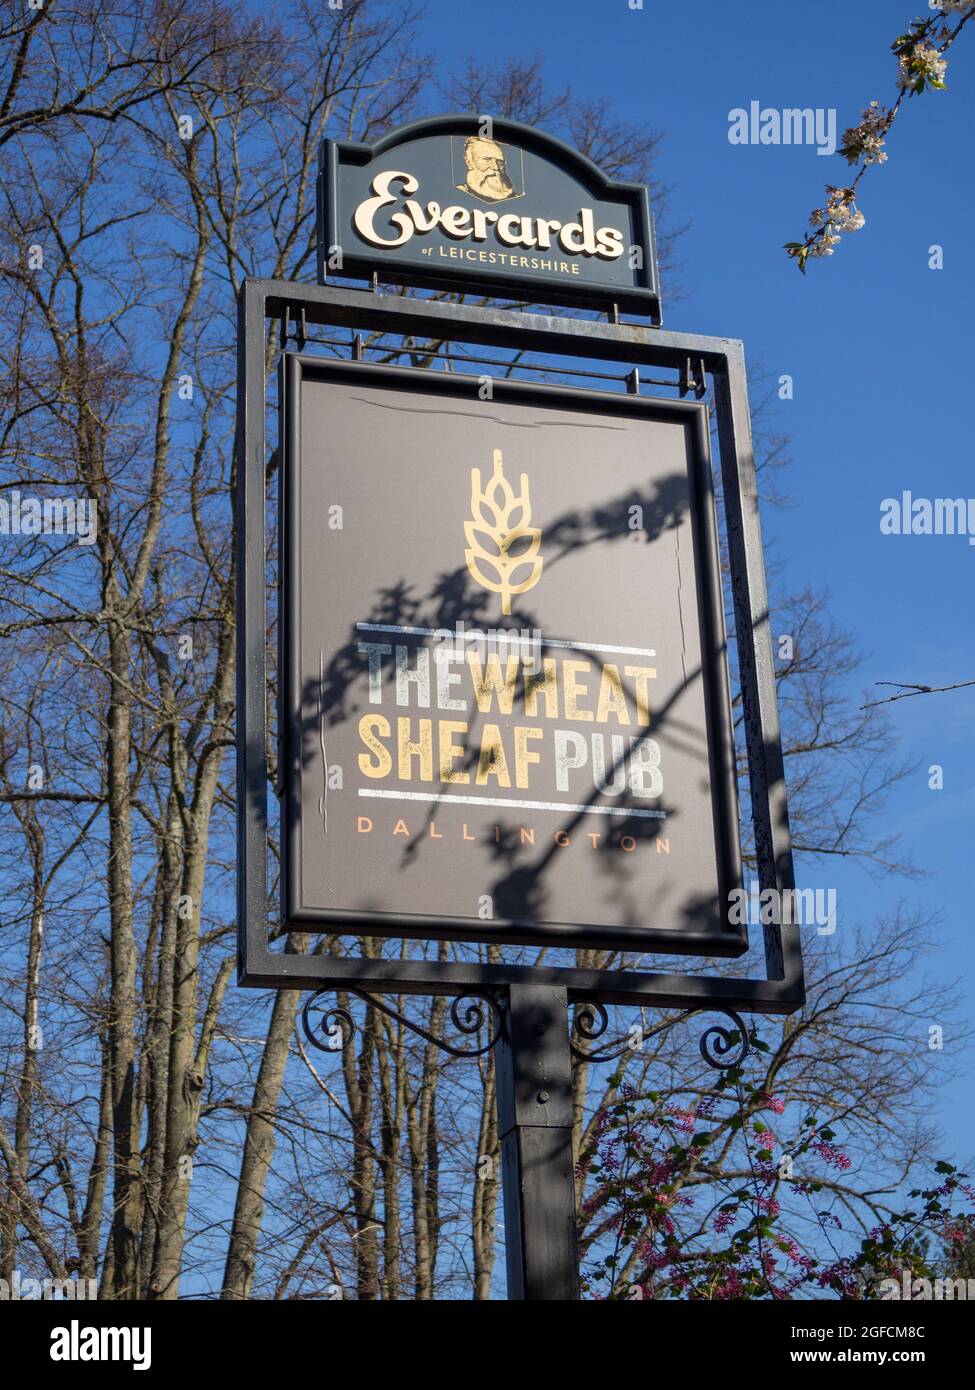 Pub sign for the Wheatsheaf, an Everard's pub in the village of Dallington, Northampton, UK Stock Photo